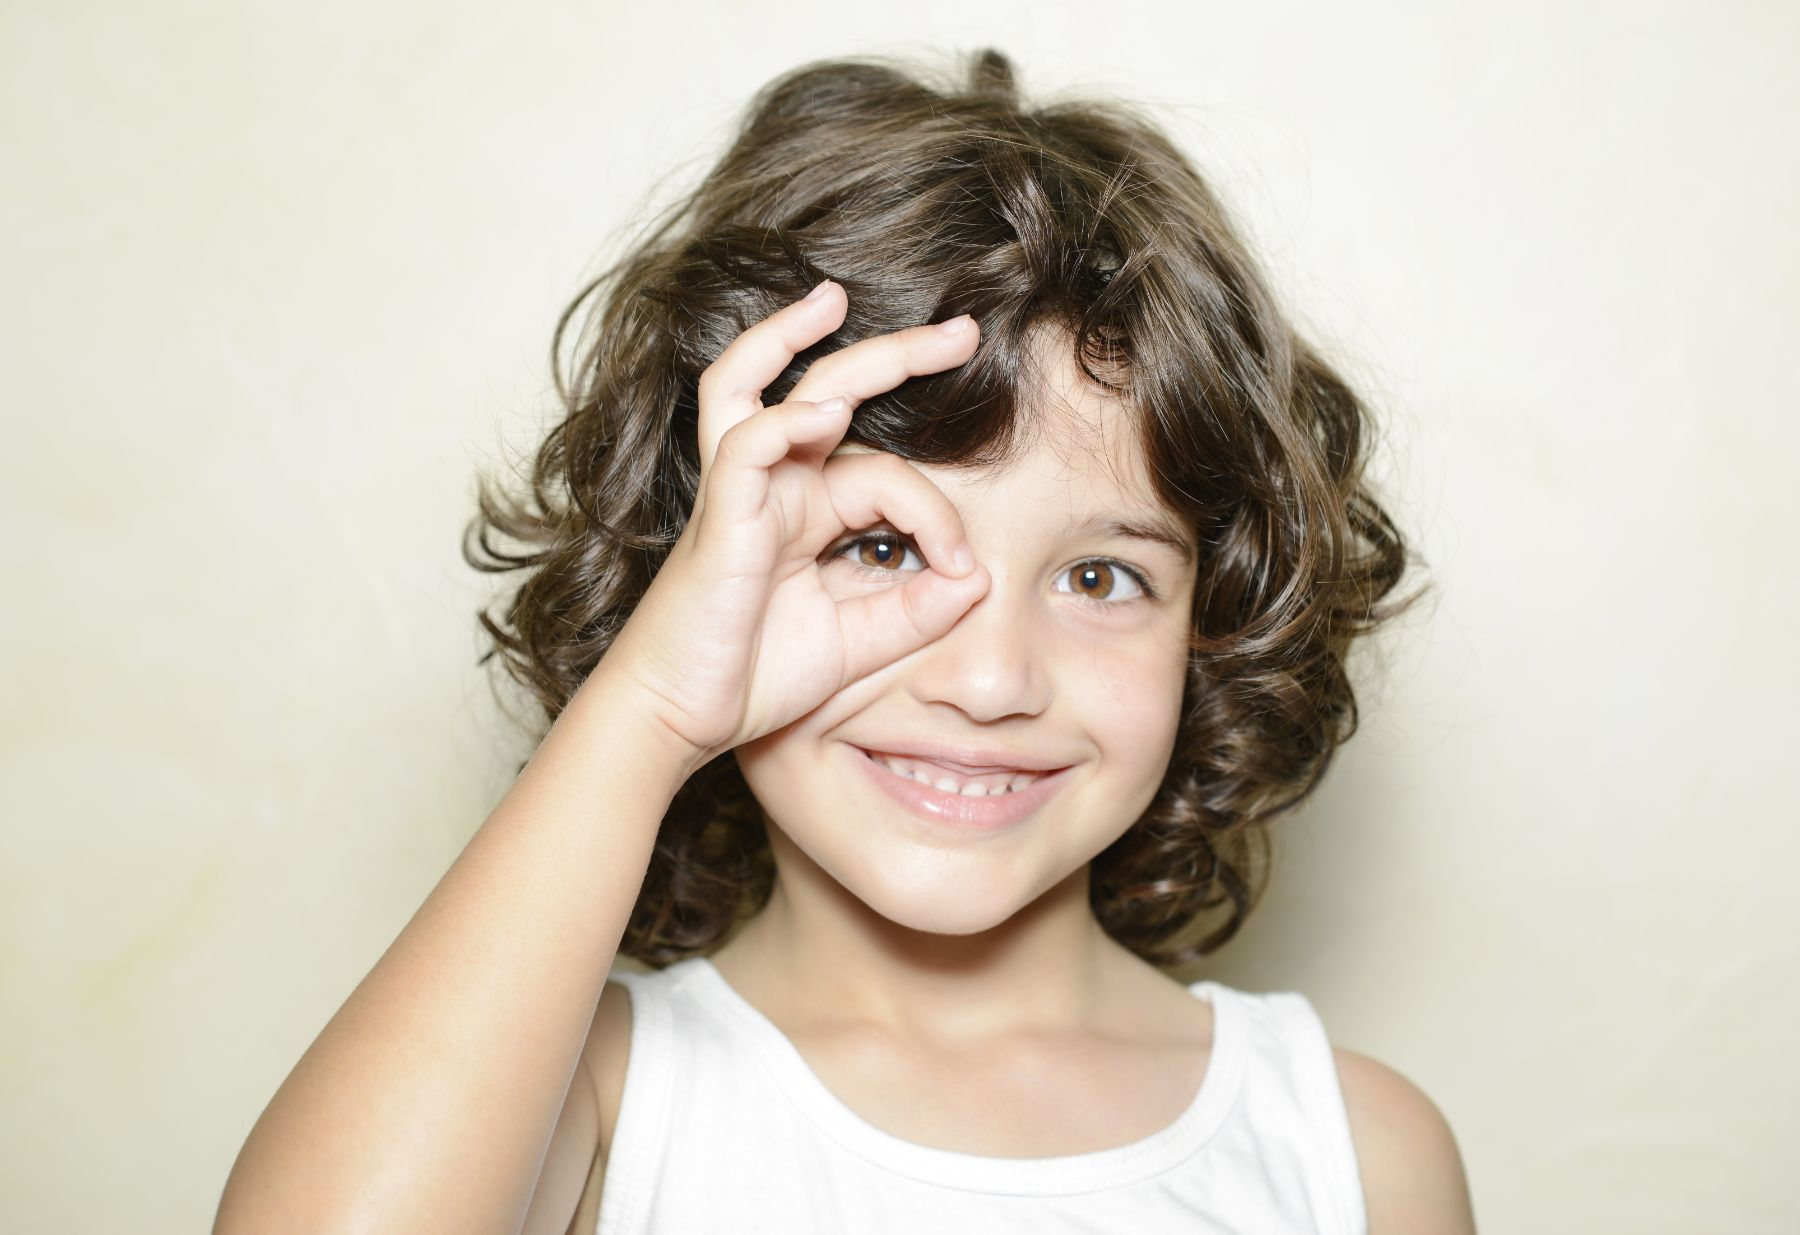 pediatric eye disorders treated by eyesthetics